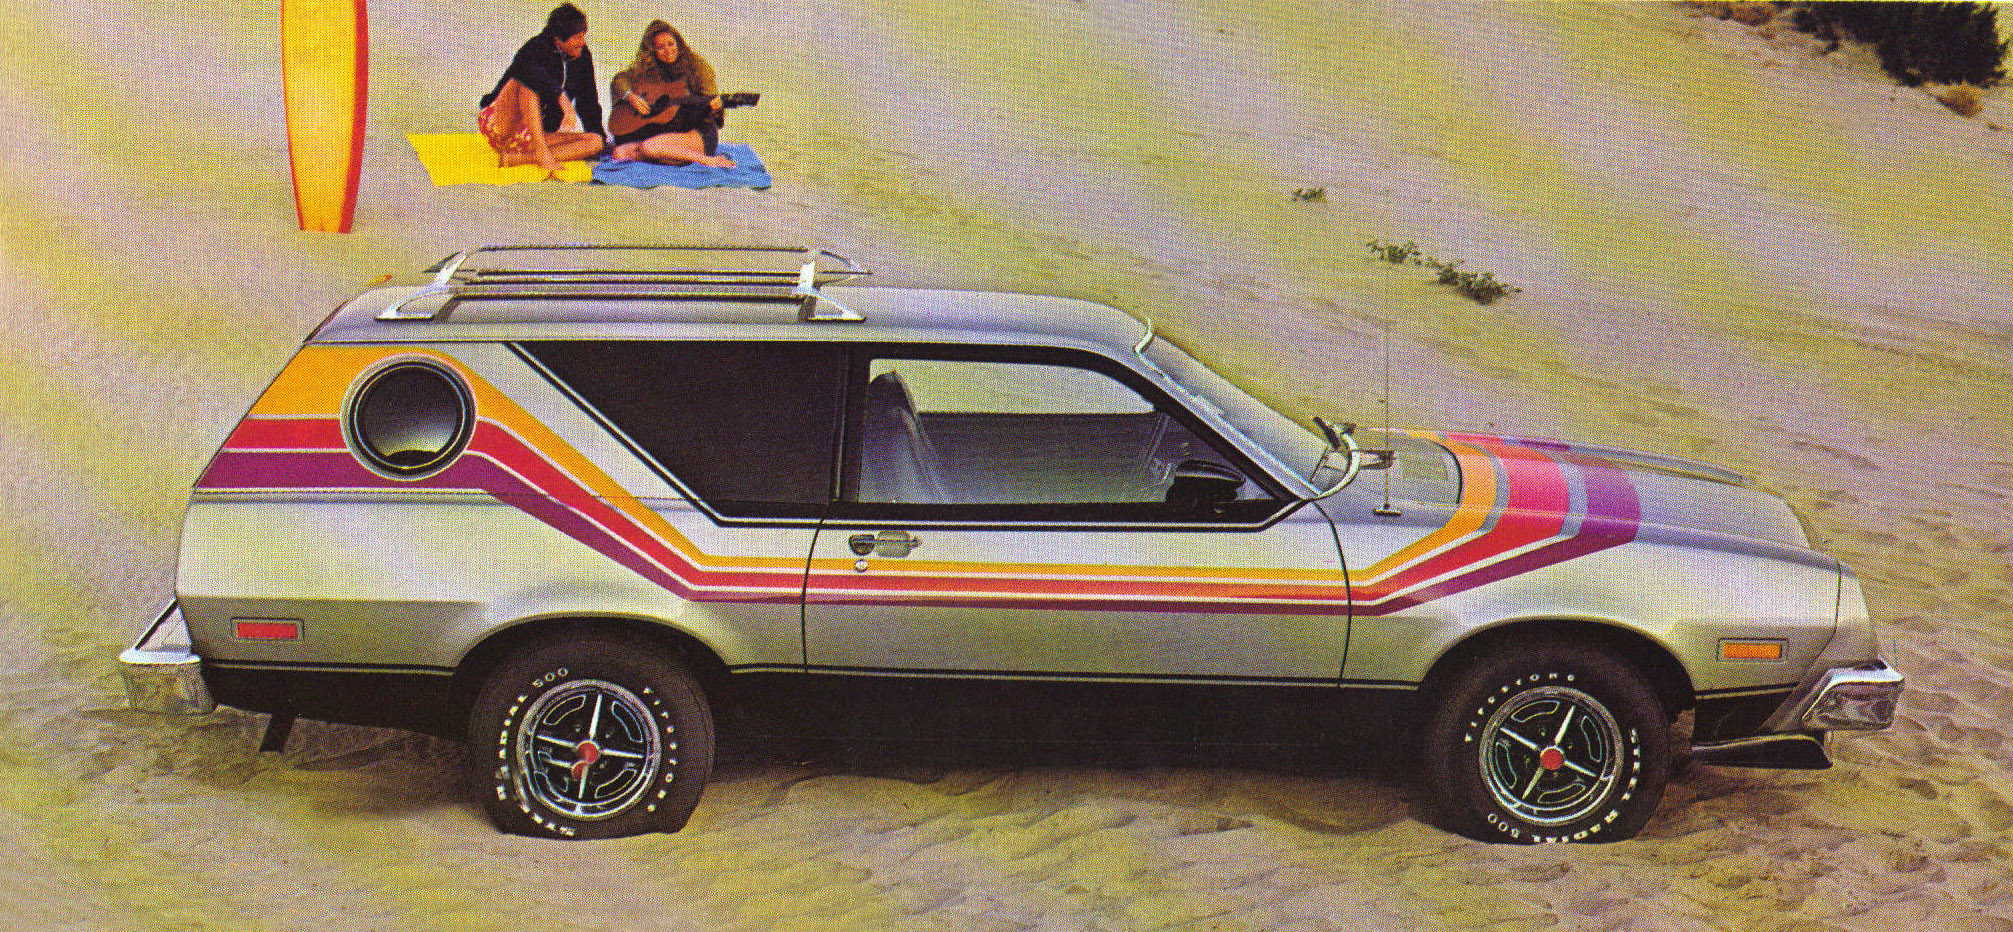 1977 Ford pinto hatchback